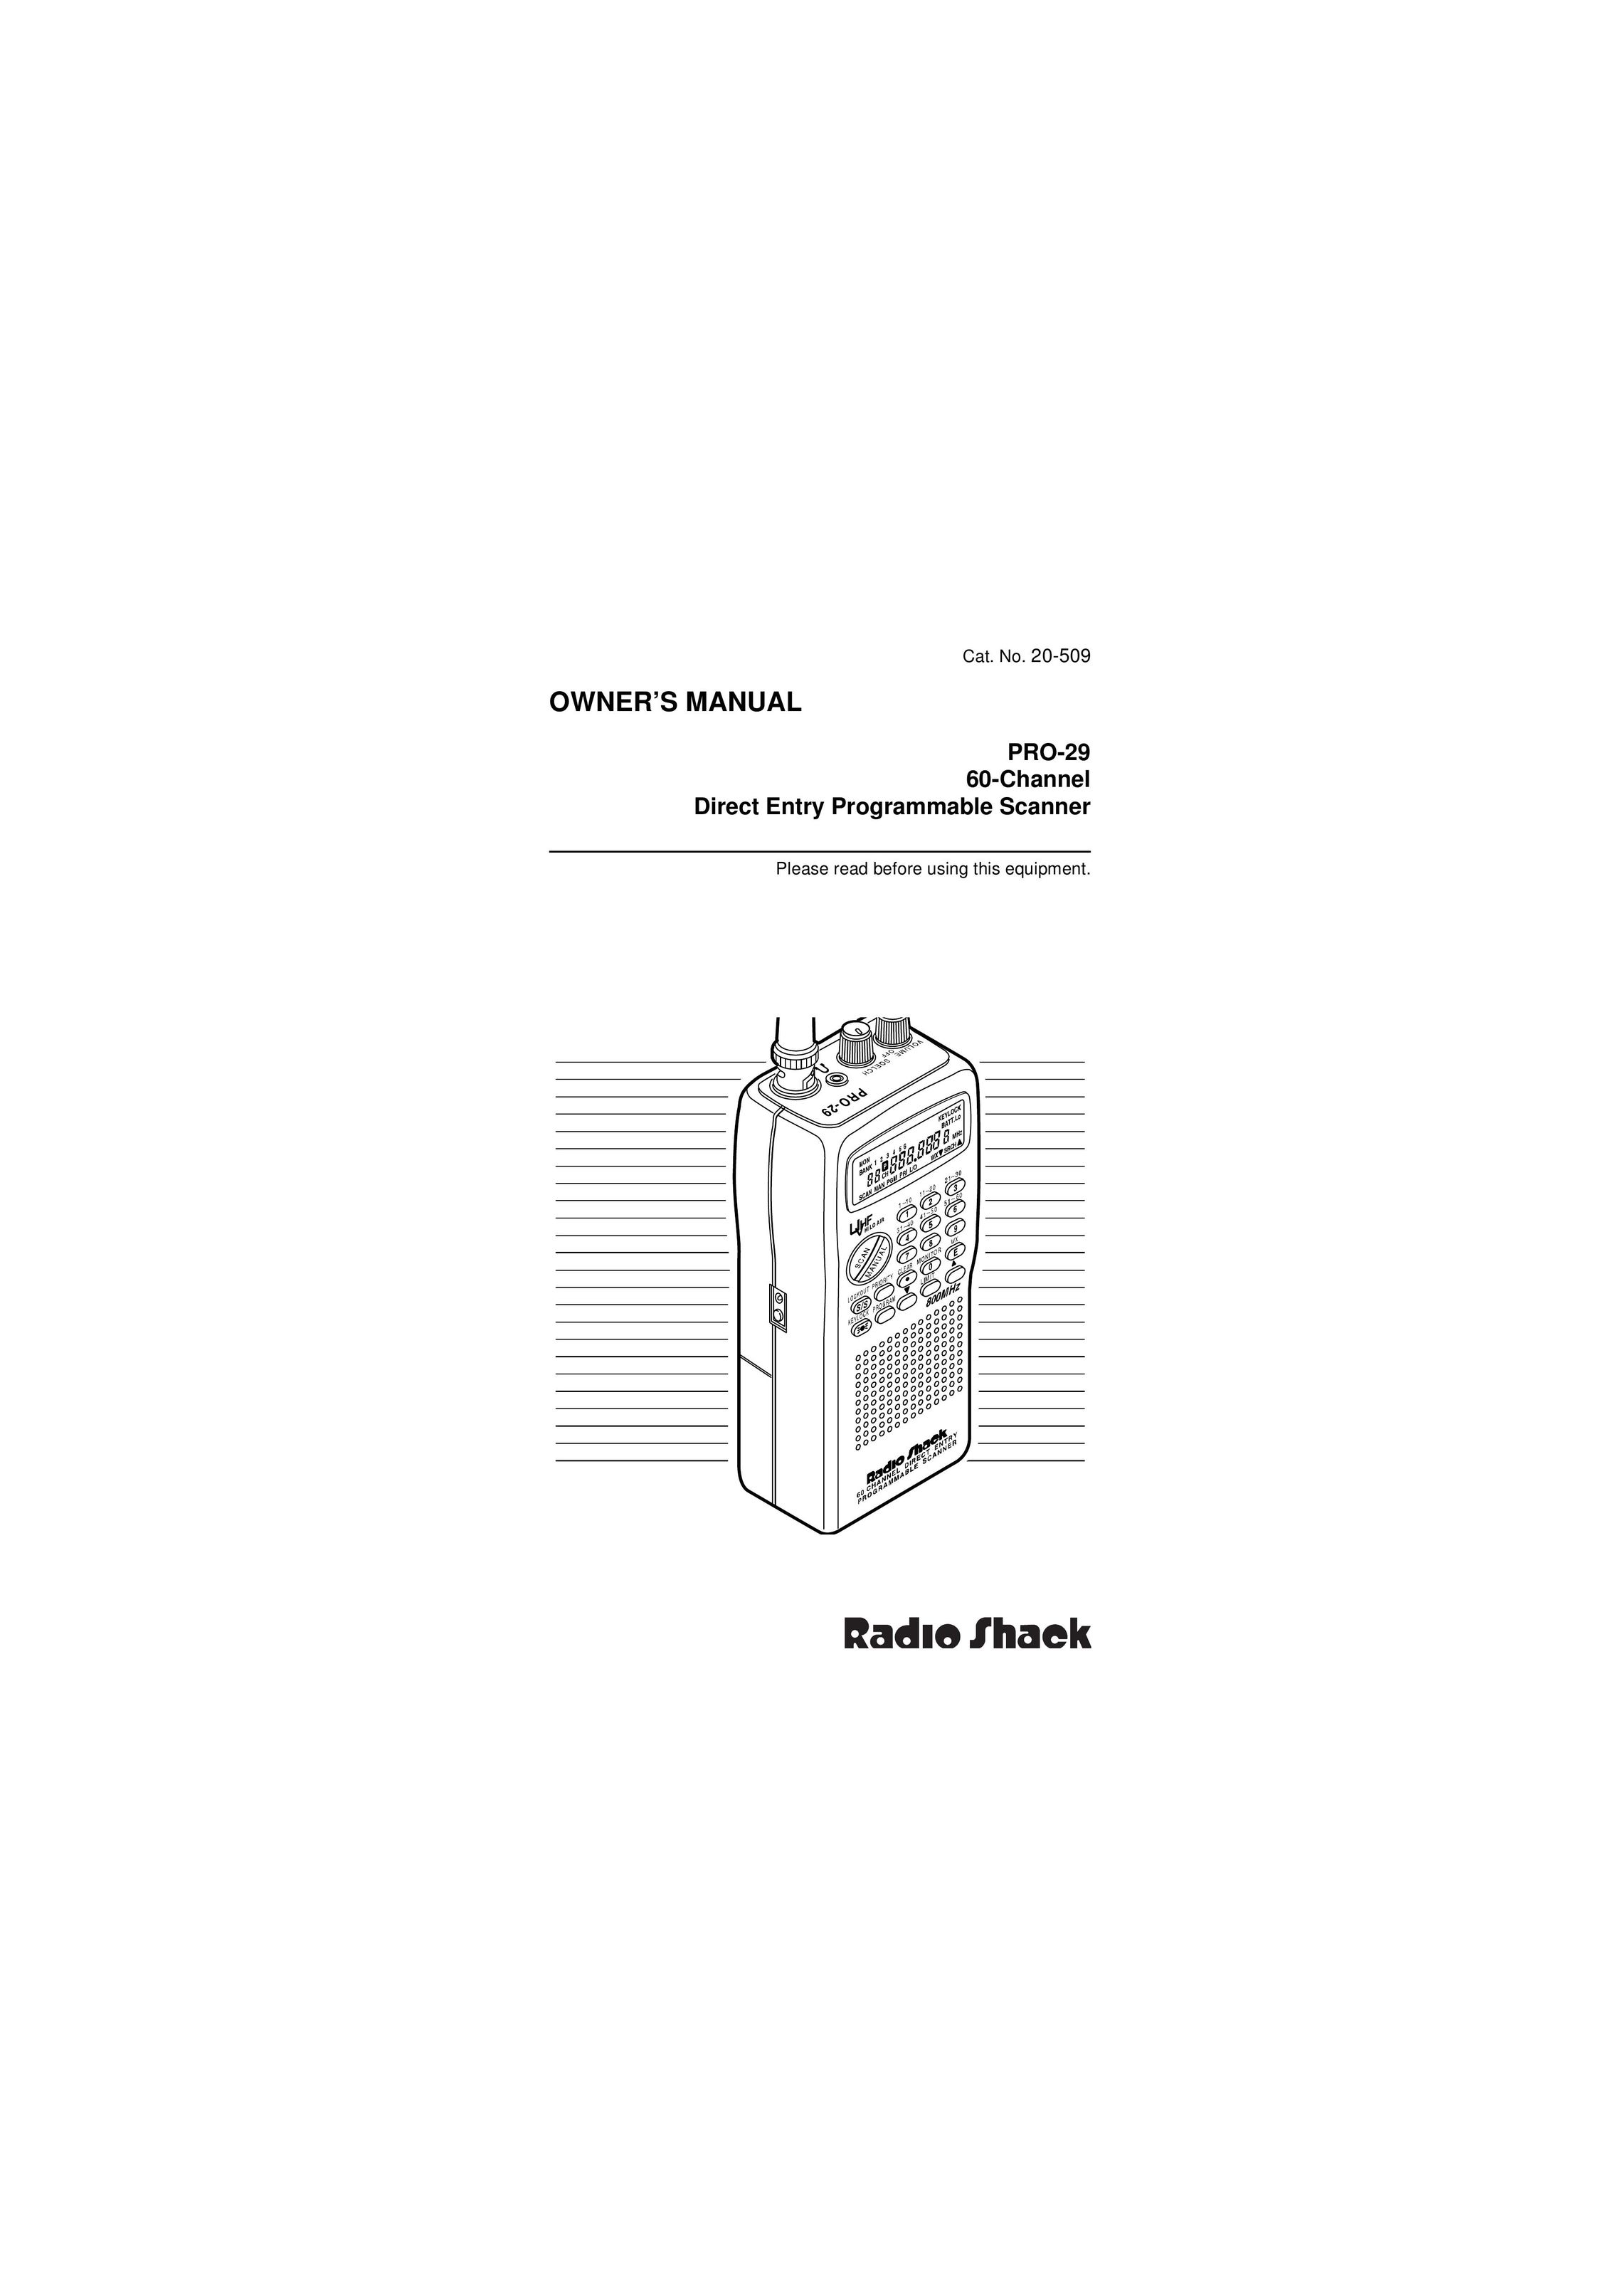 Radio Shack PRO-29 Scanner User Manual